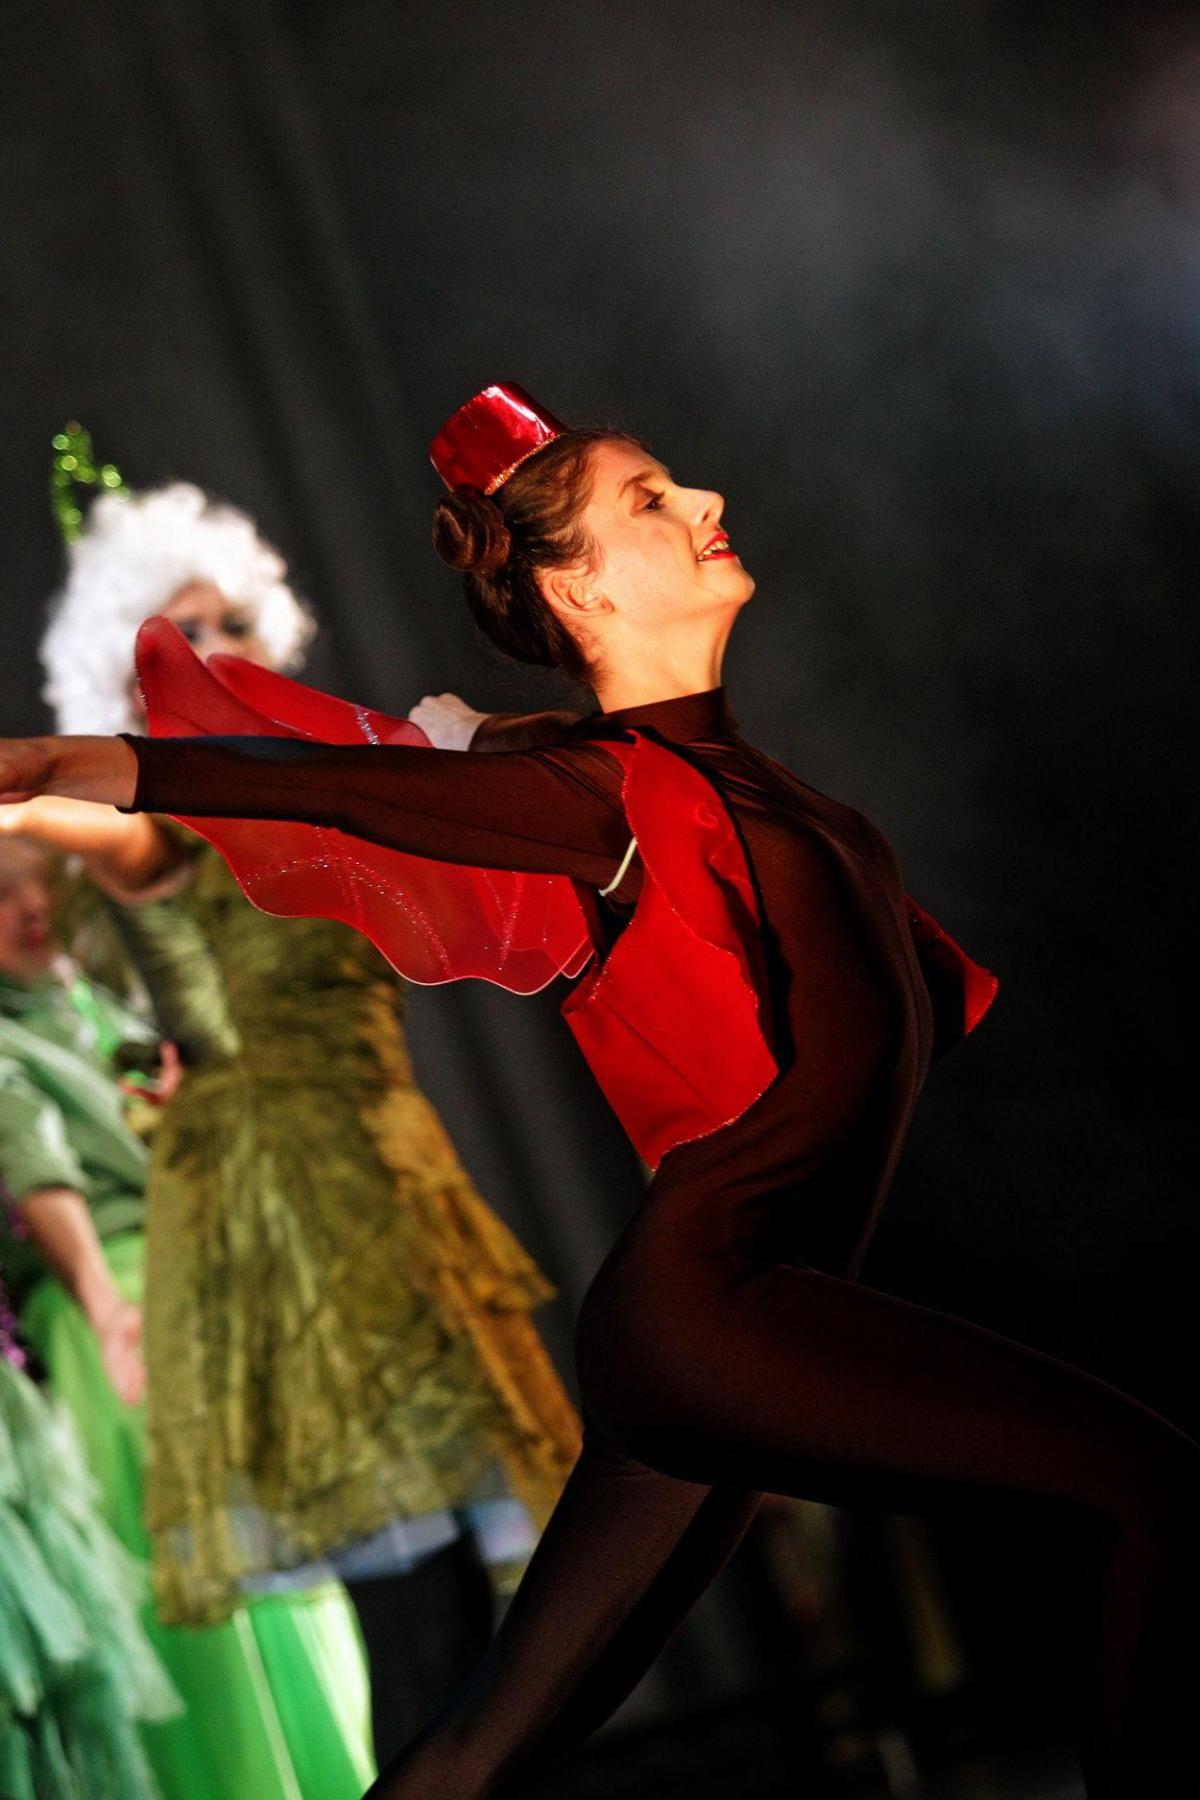 Western Association of Ballet Schools perform Enchanted